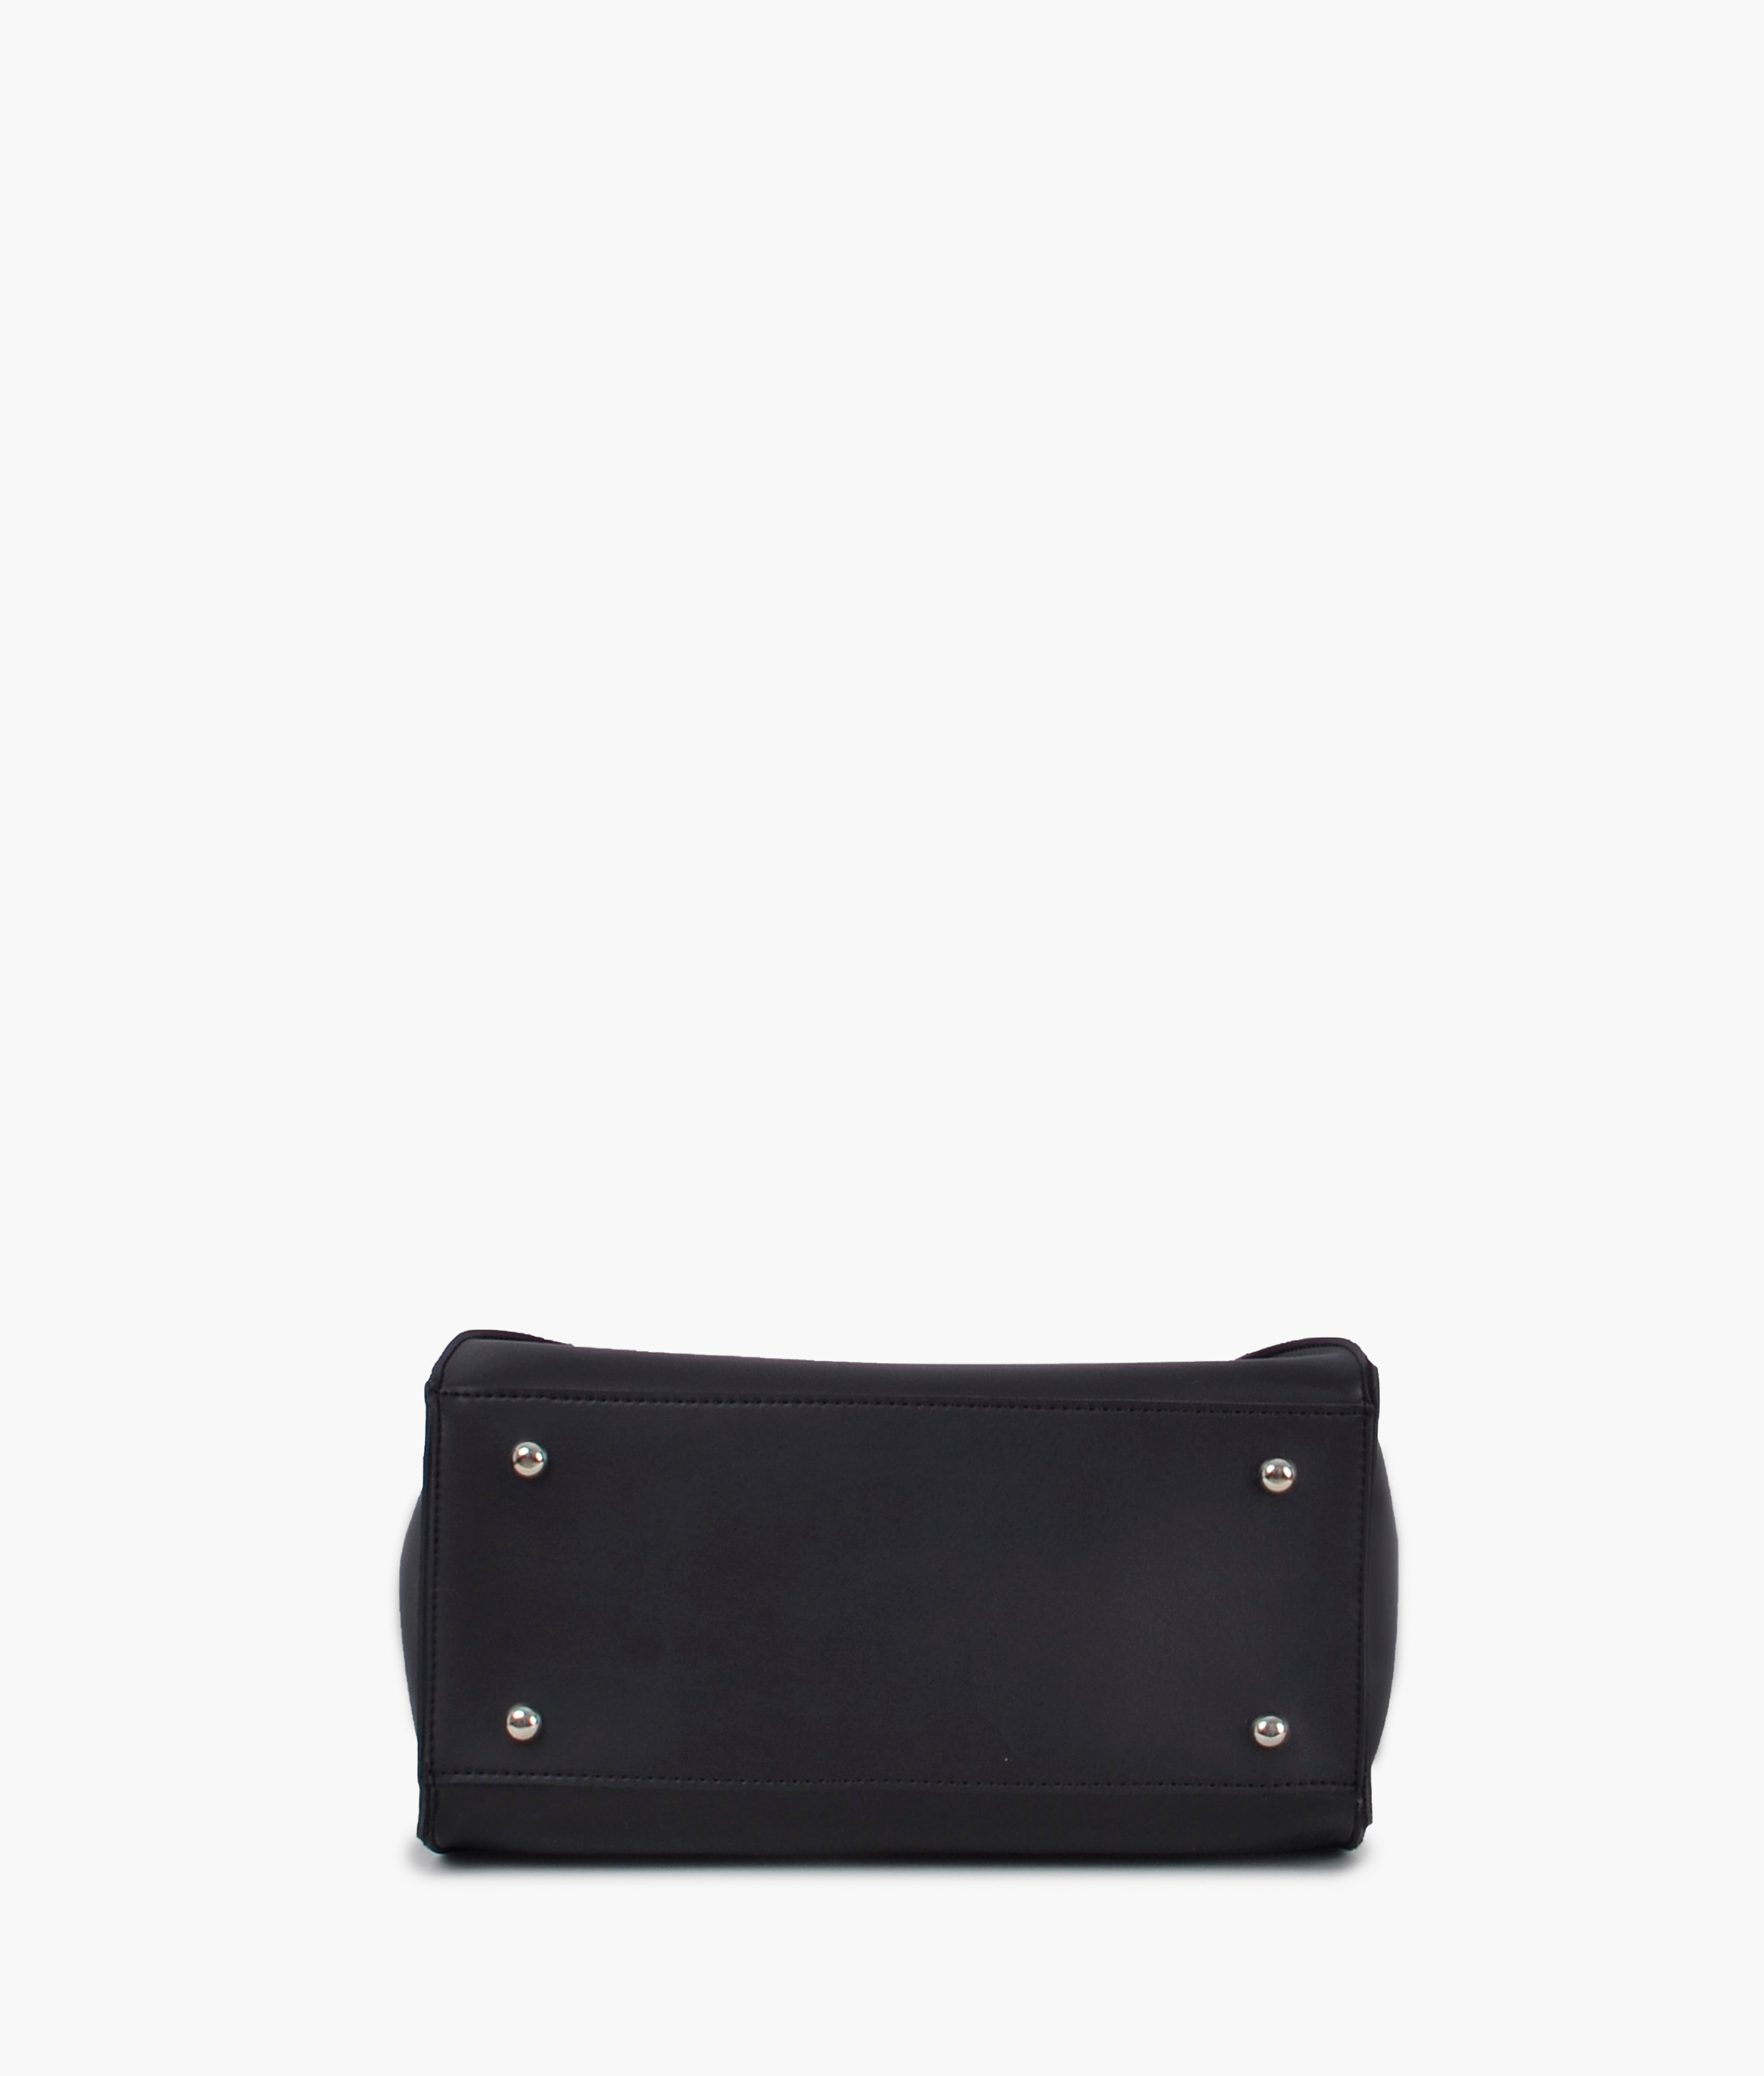 Black shopping tote bag